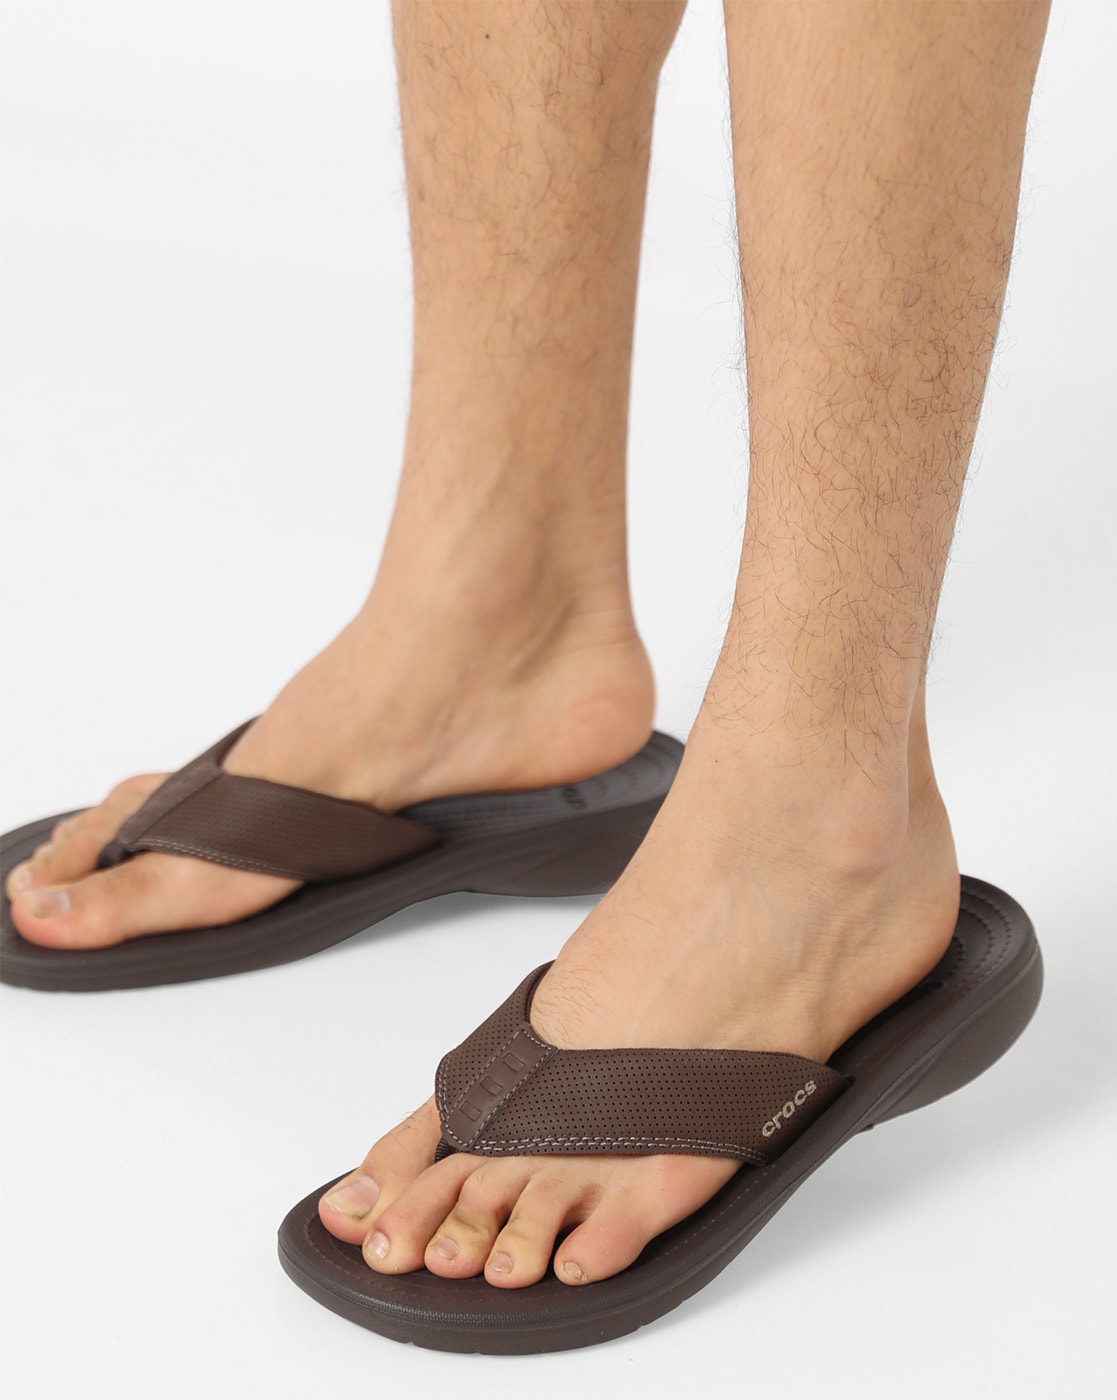 crocs unisex's flip flops thong sandals